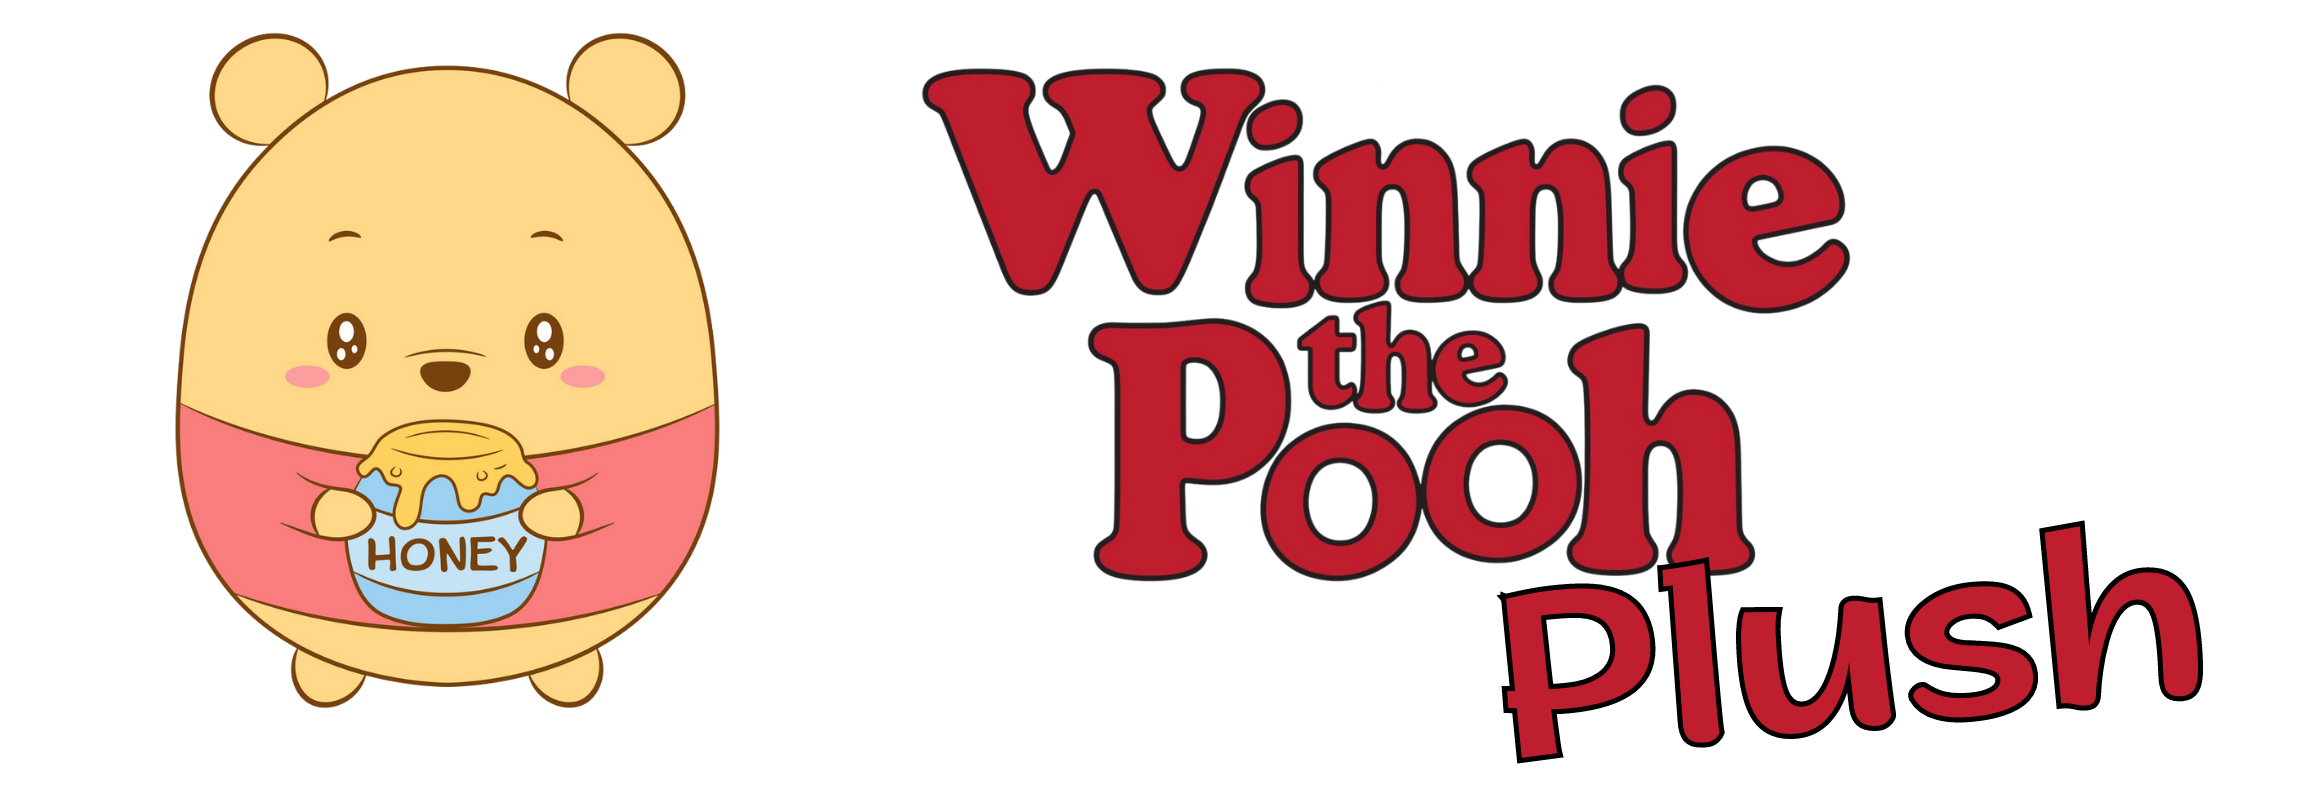 winnie the pooh plush logo1 - Winnie The Pooh Plush